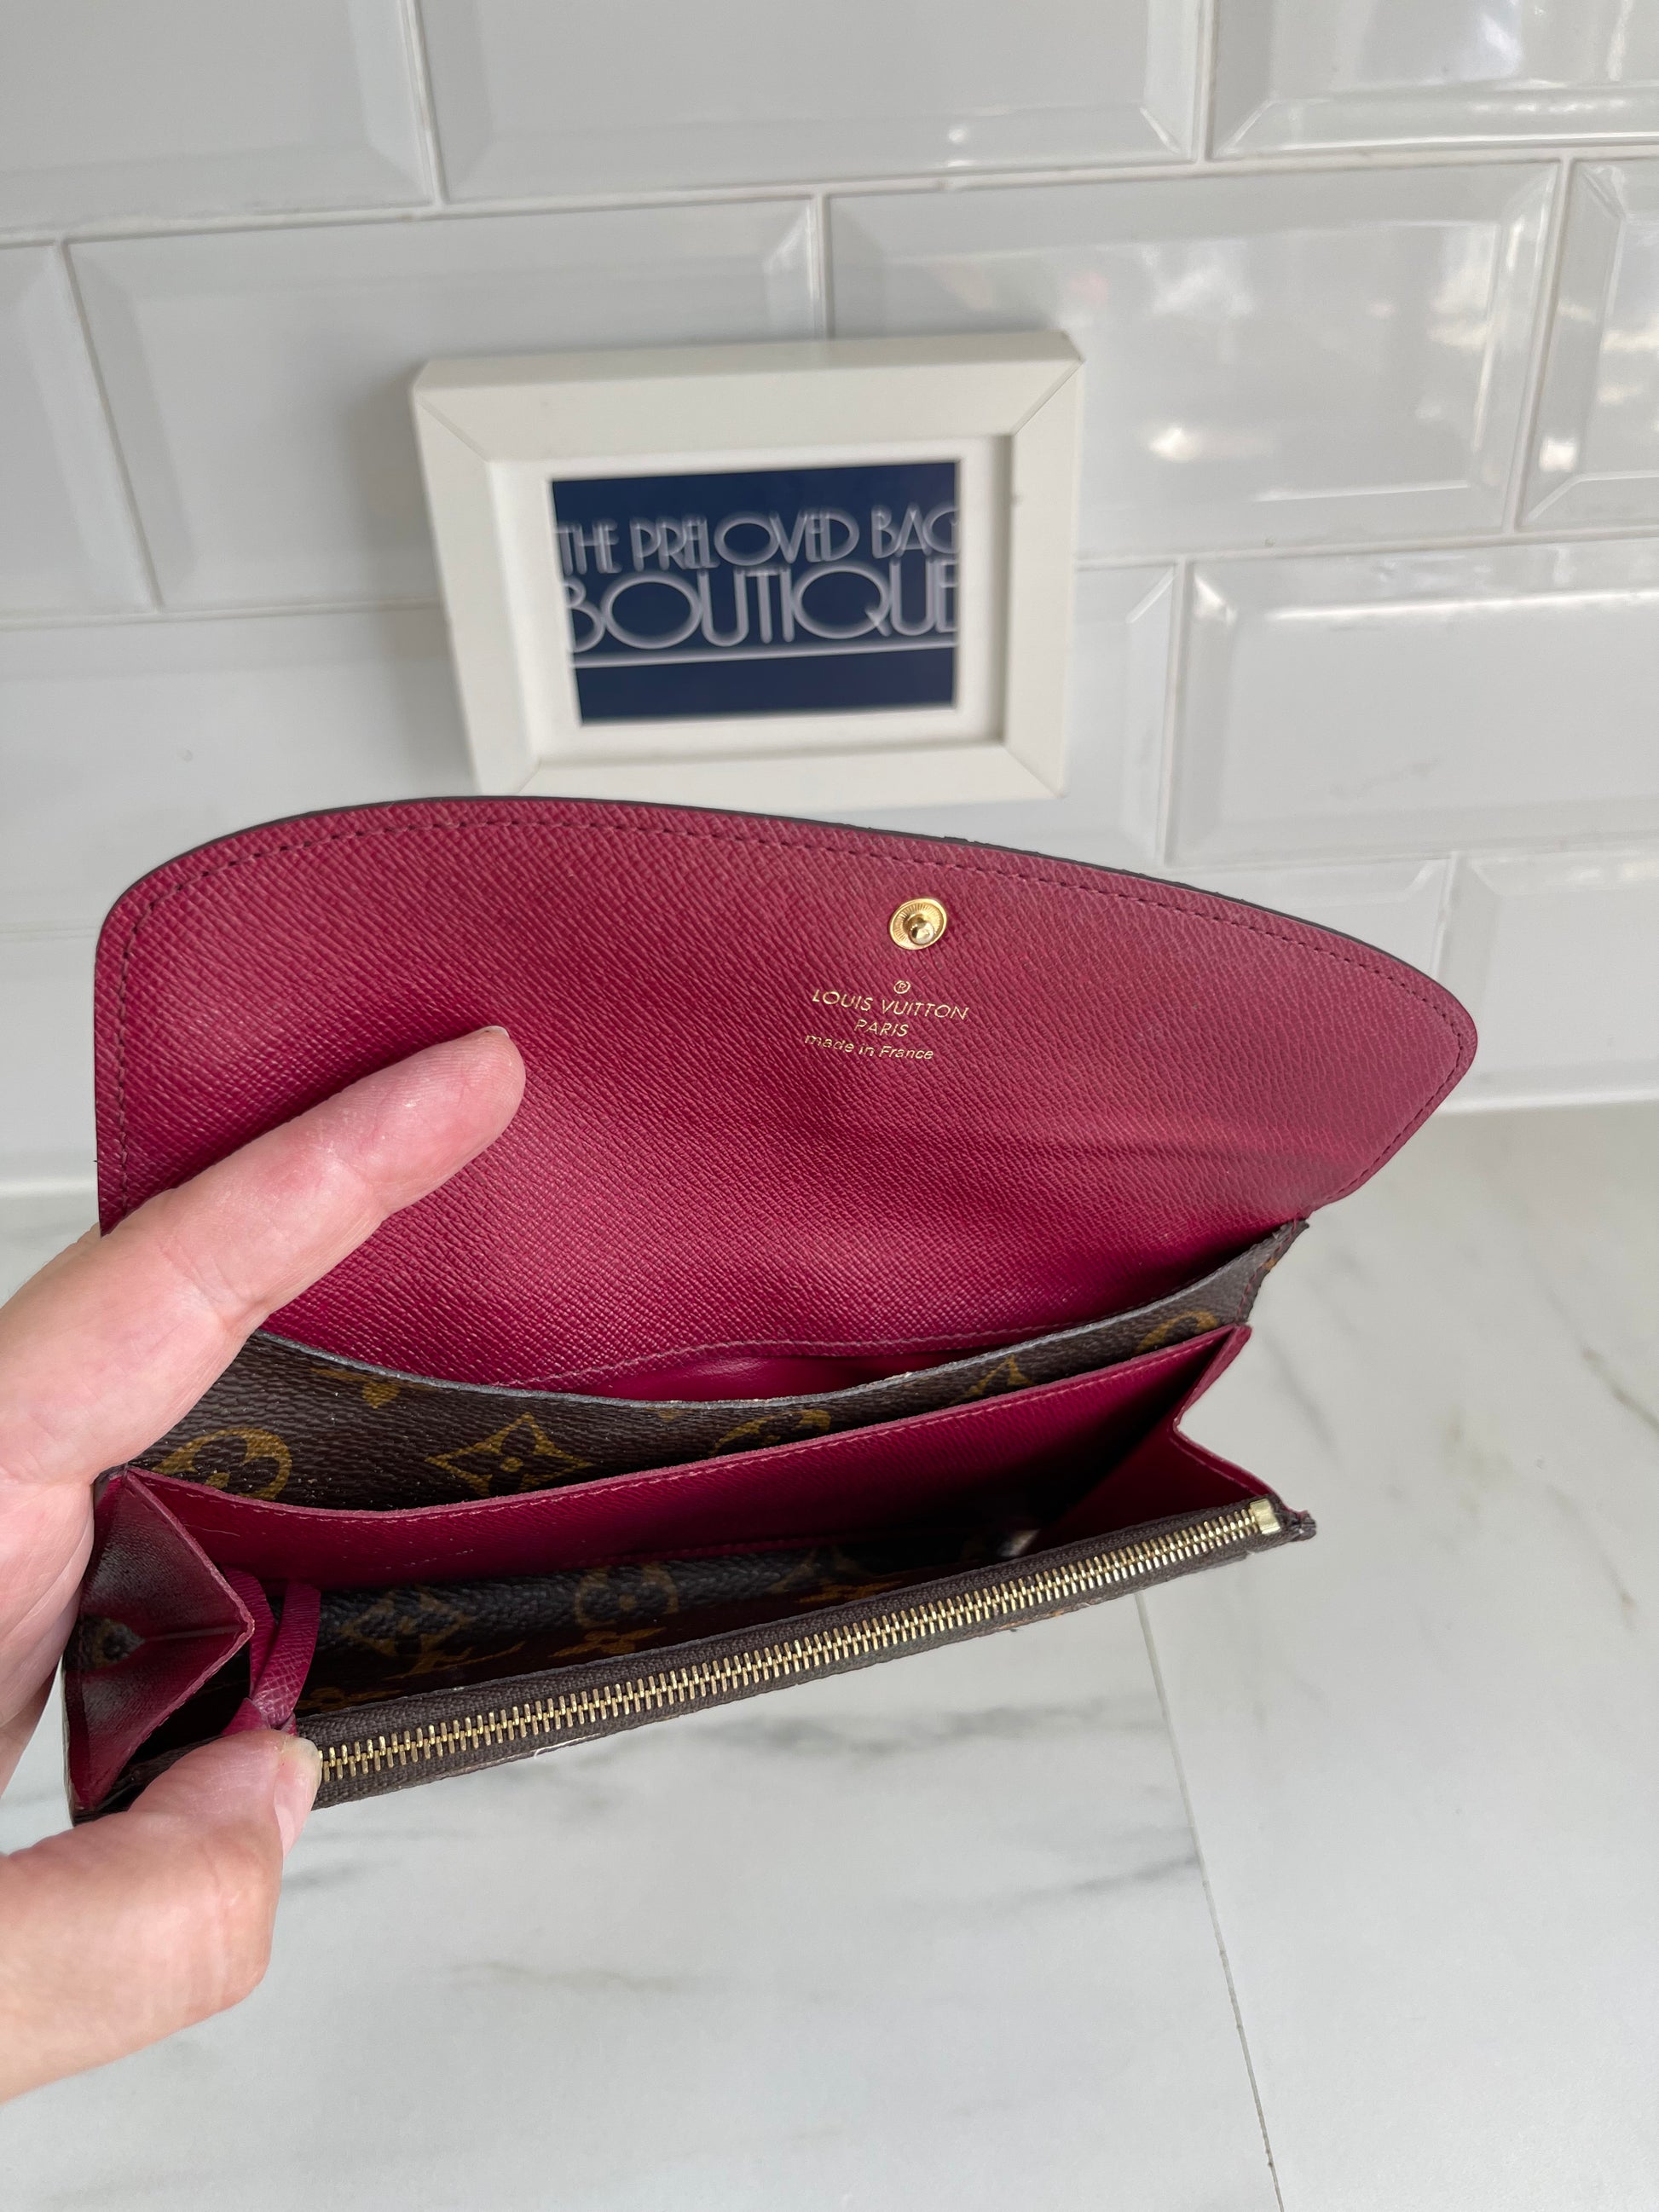 Louis Vuitton Emilie Continental Purse Wallet in Monogram Fuchsia - SOLD